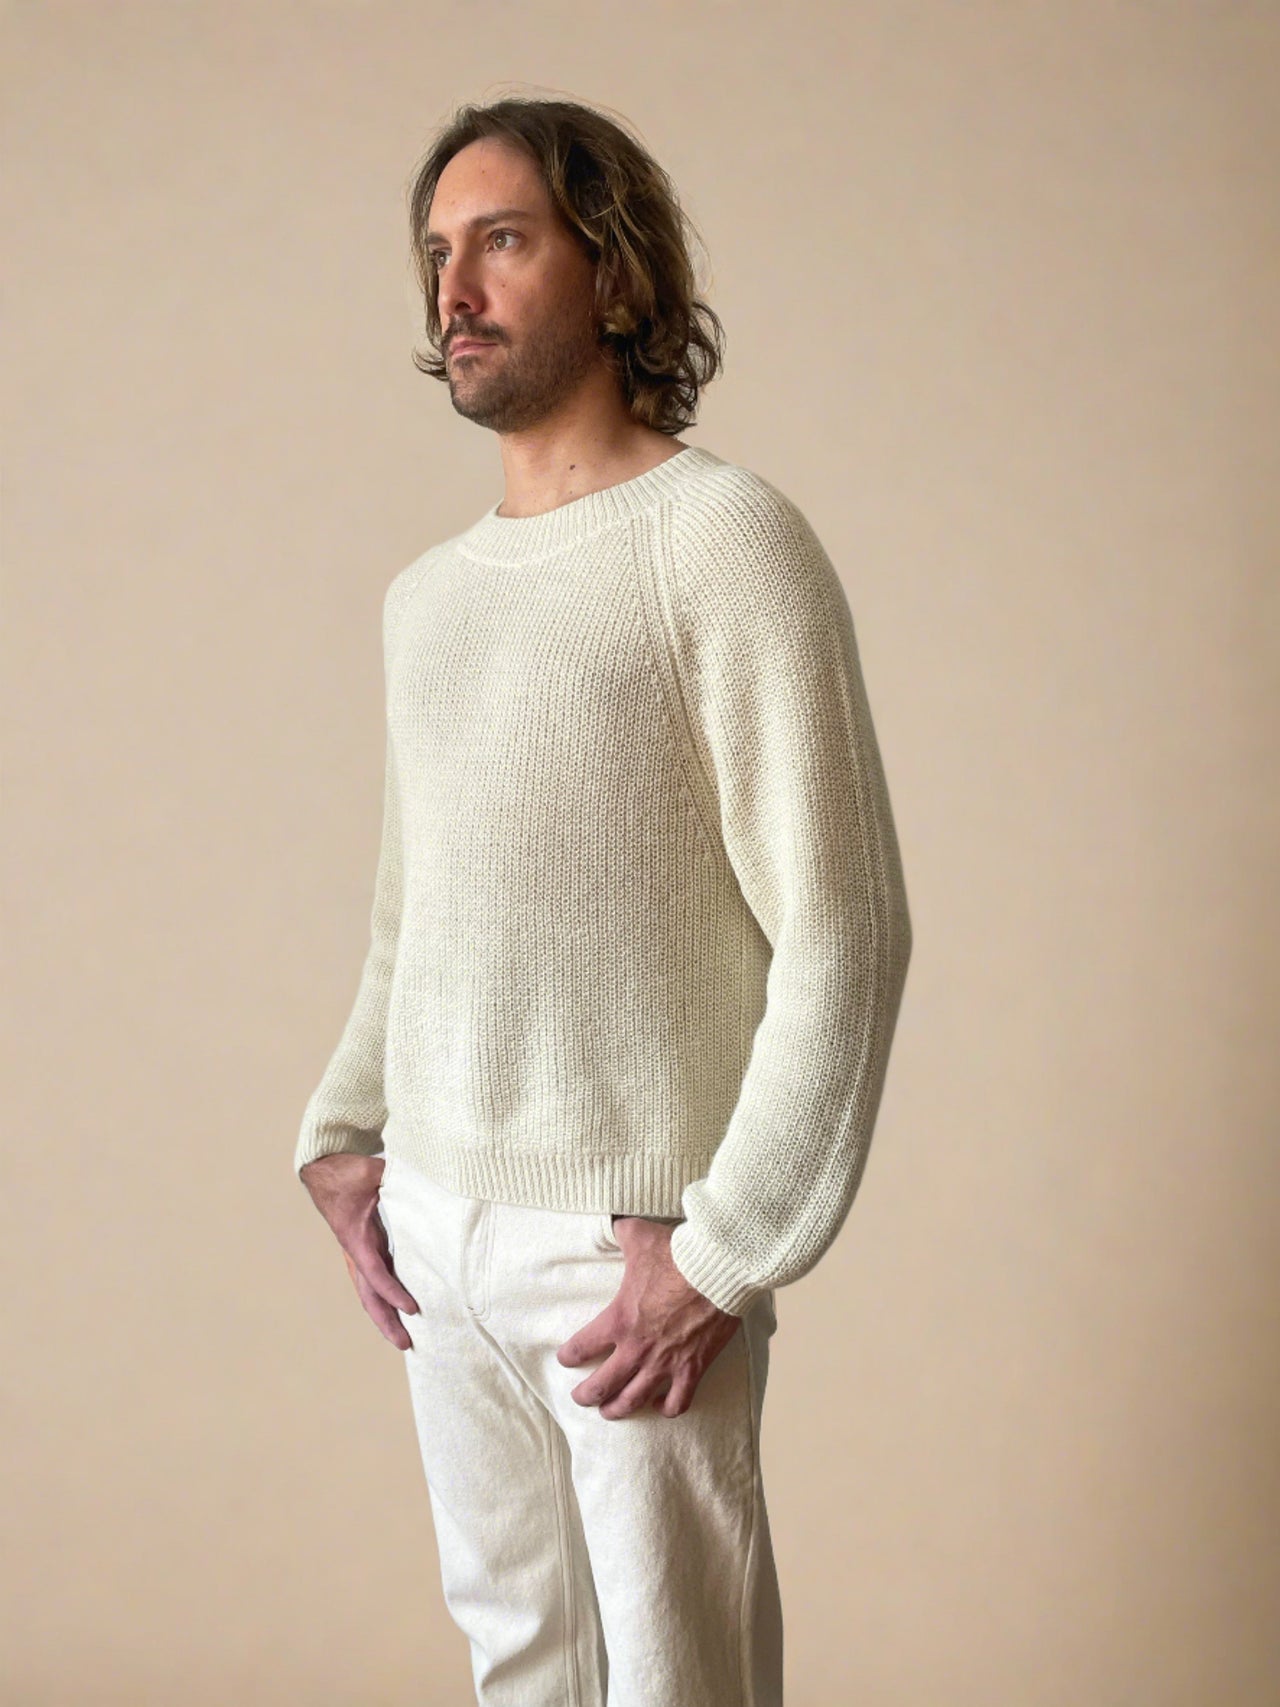 Tomás Sweater Crudo Man